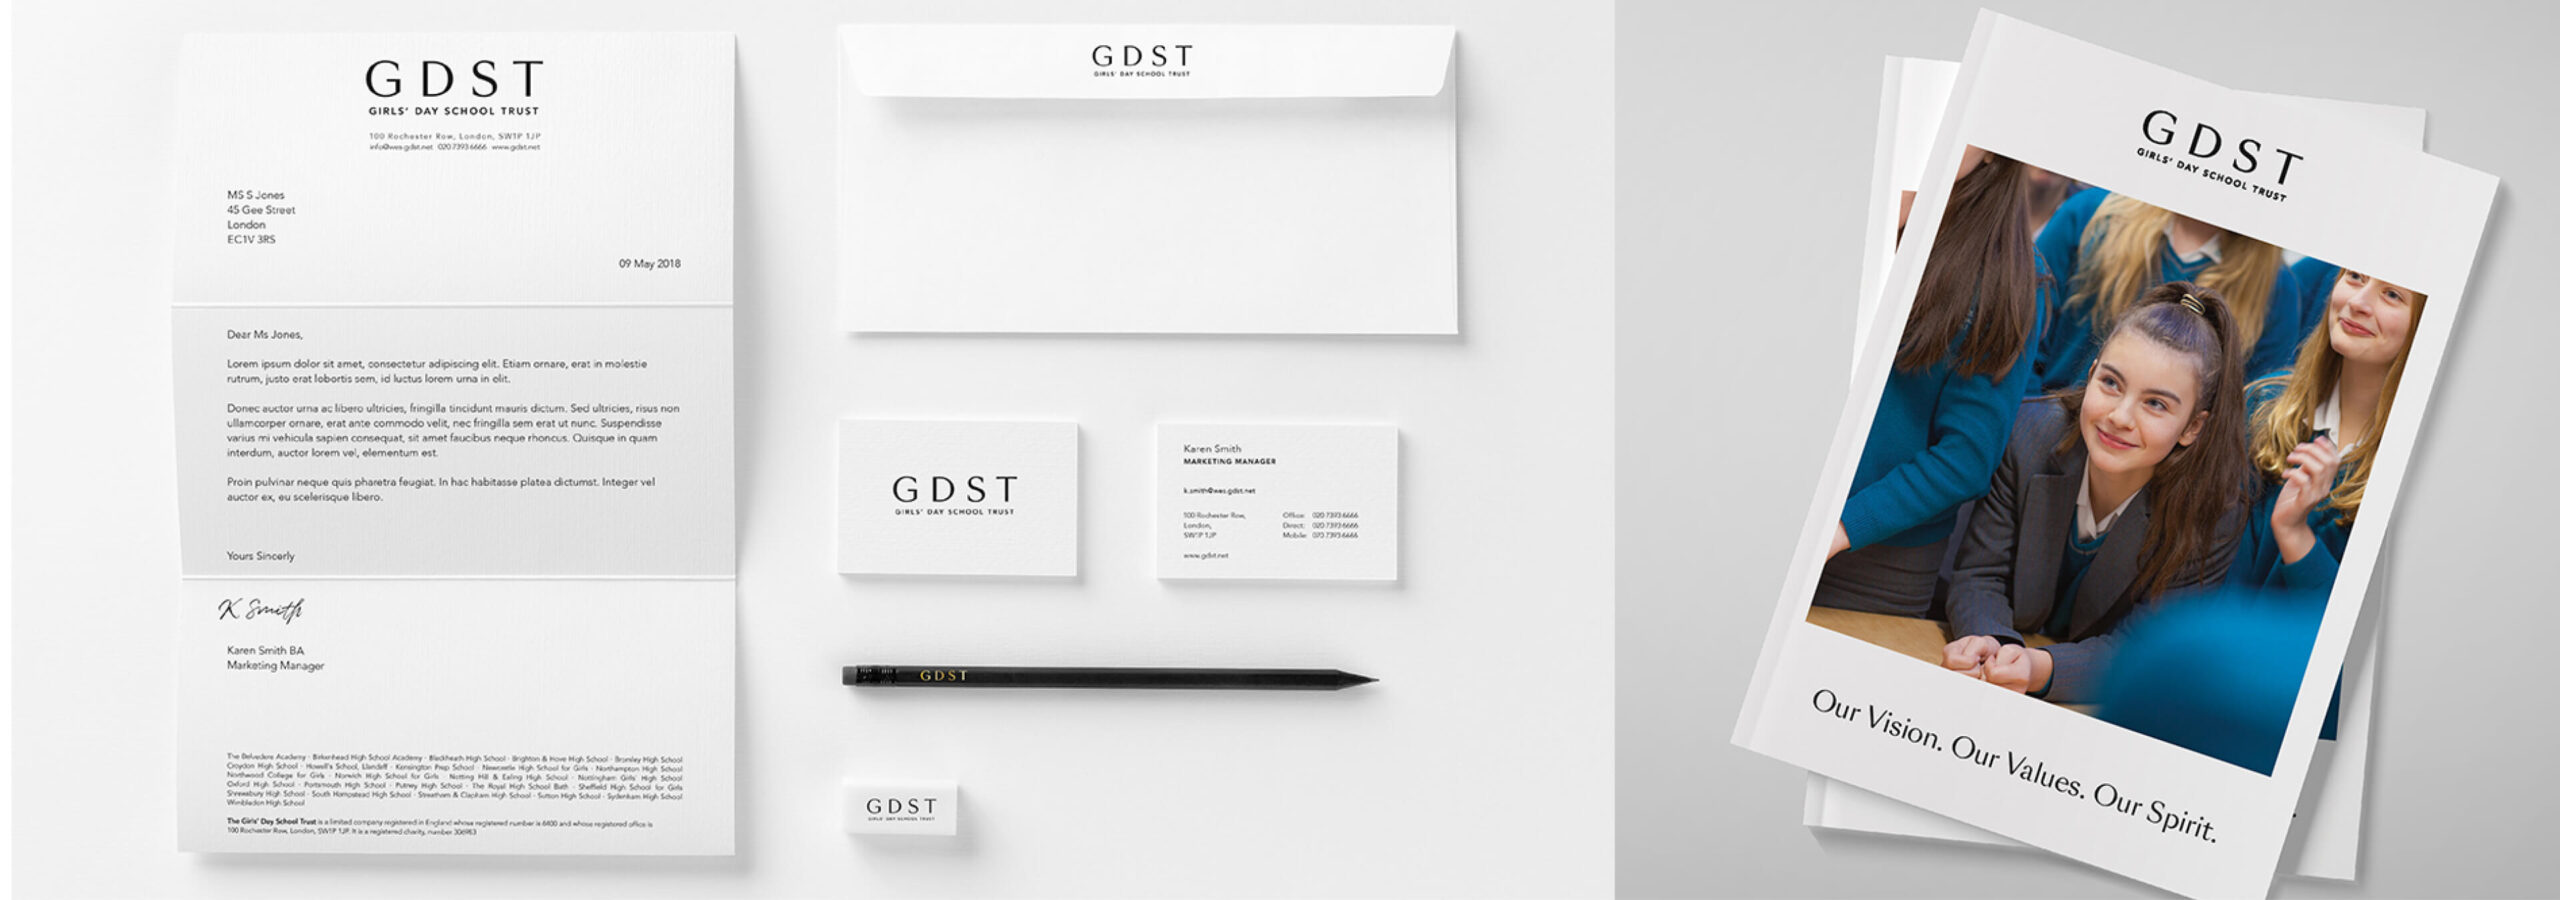 GDST brand identity